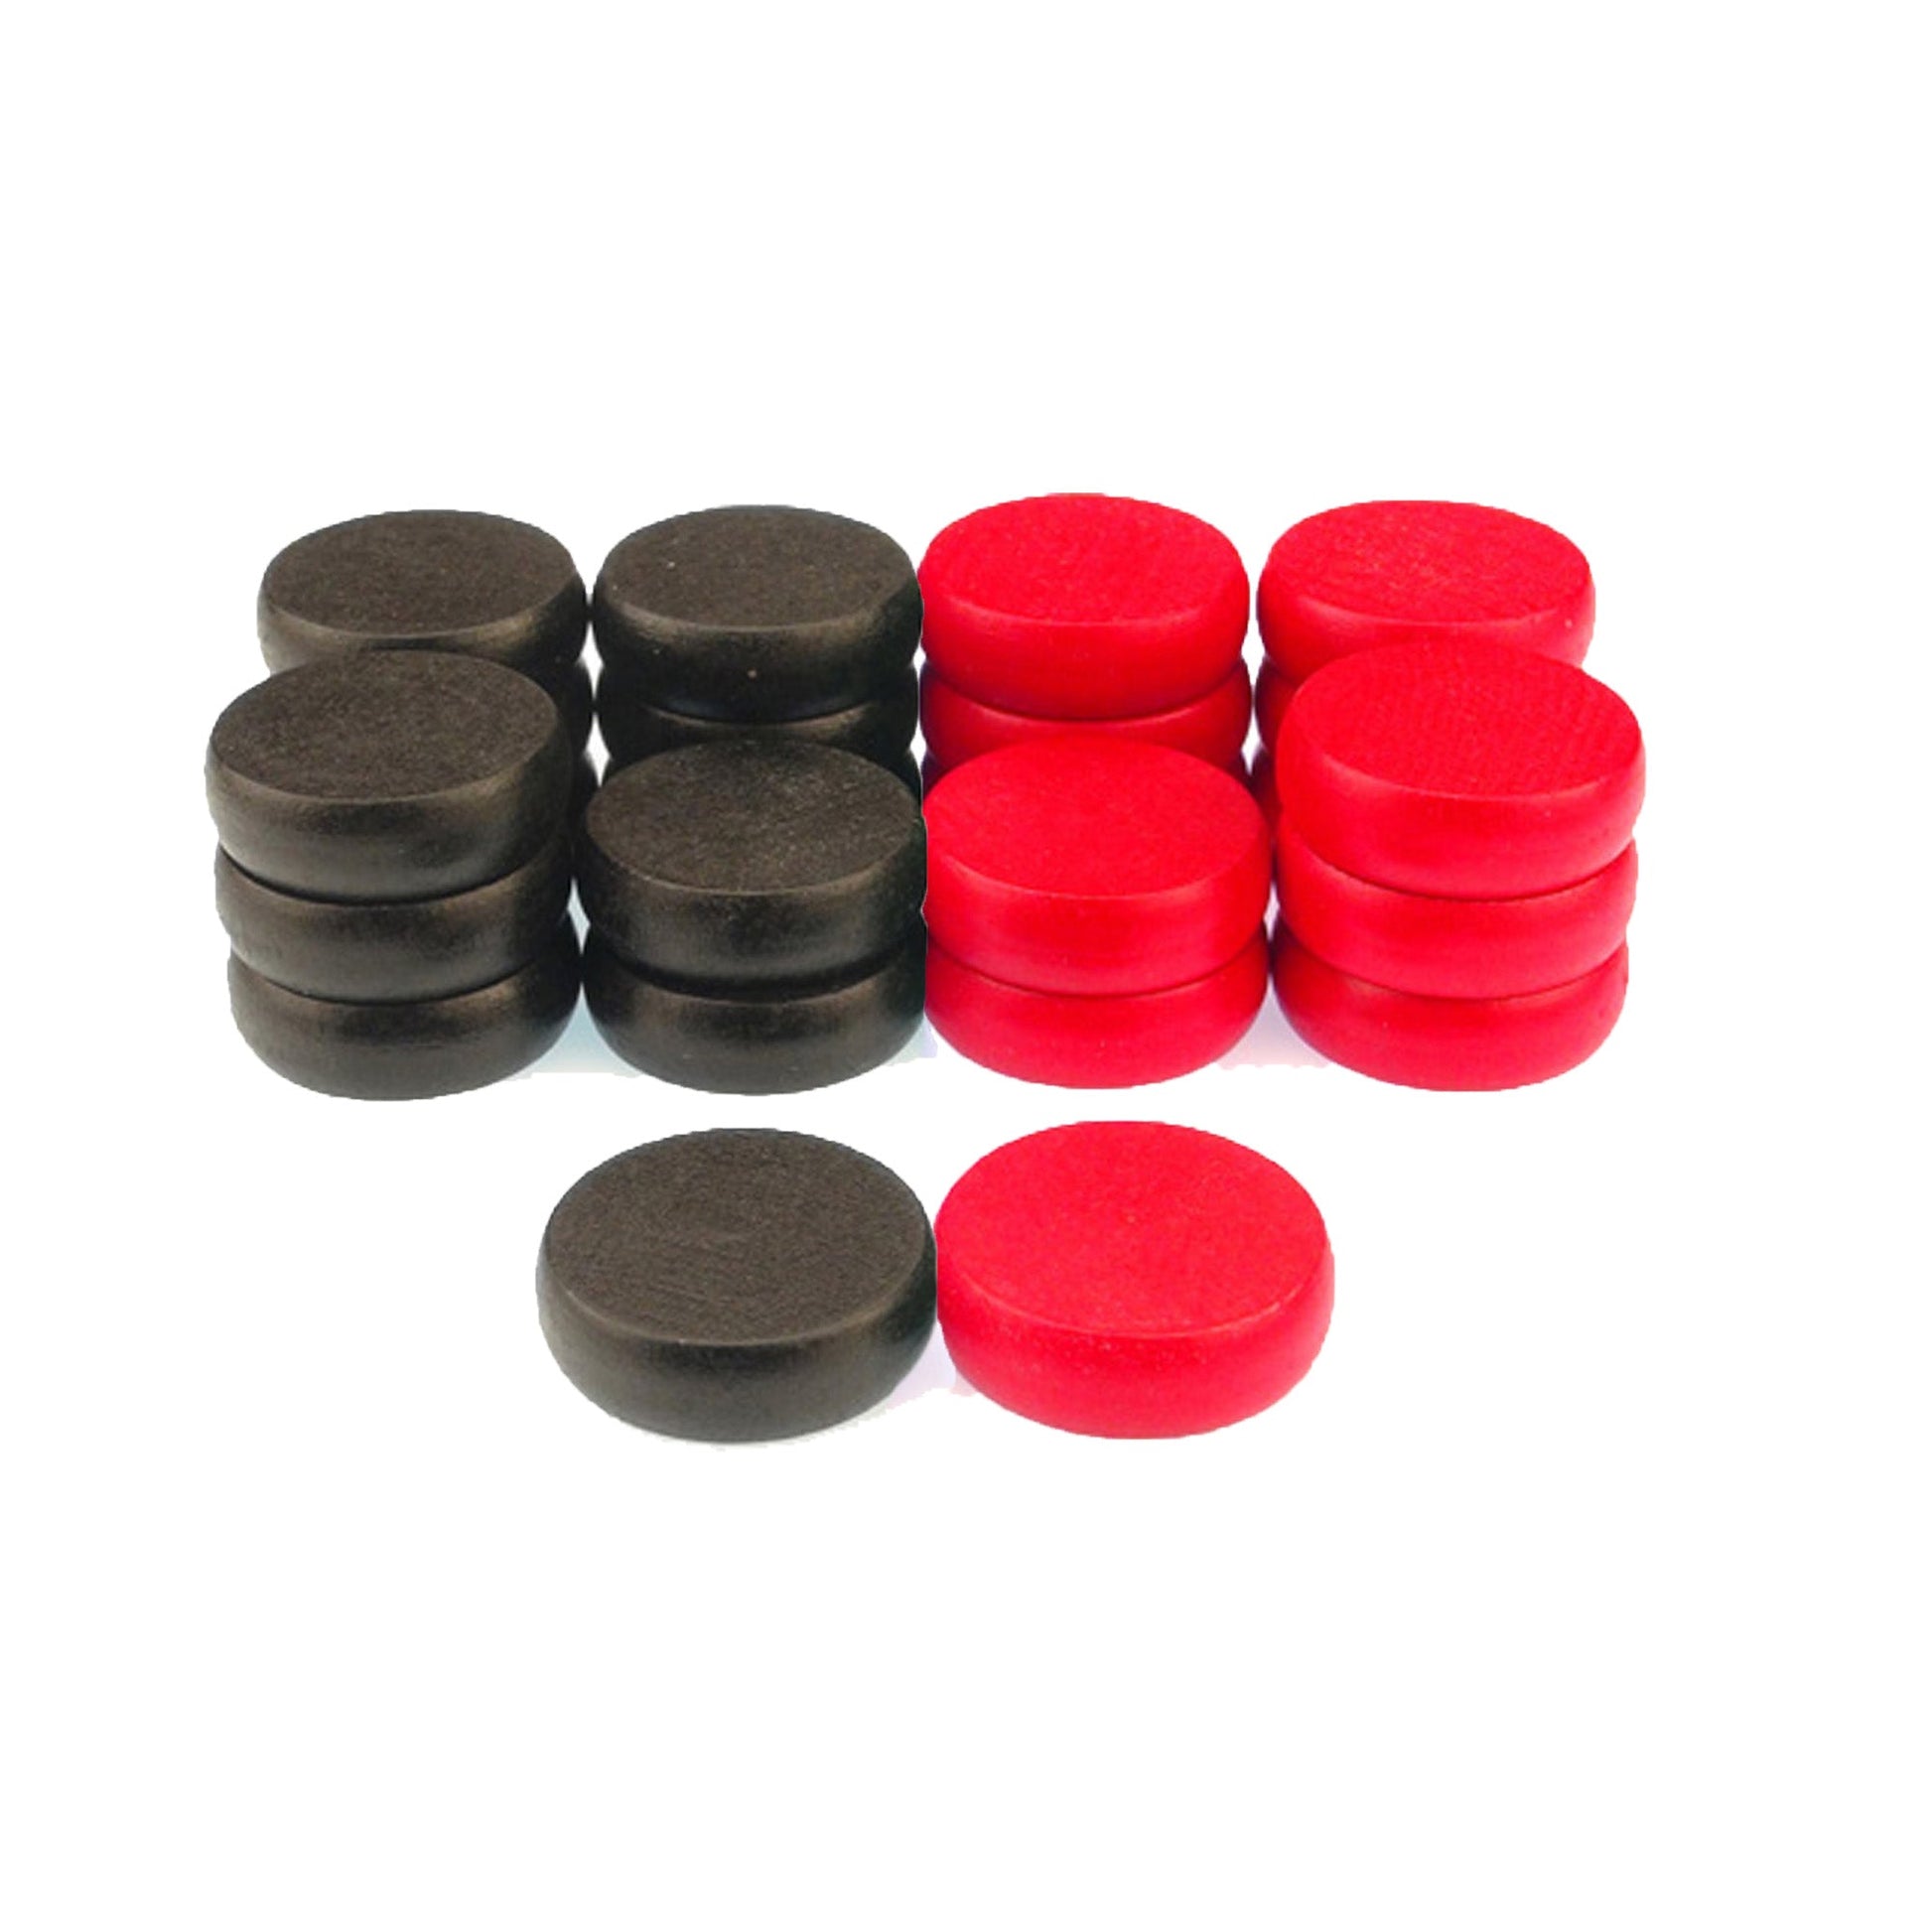 26-black-red crokinole tournament discs